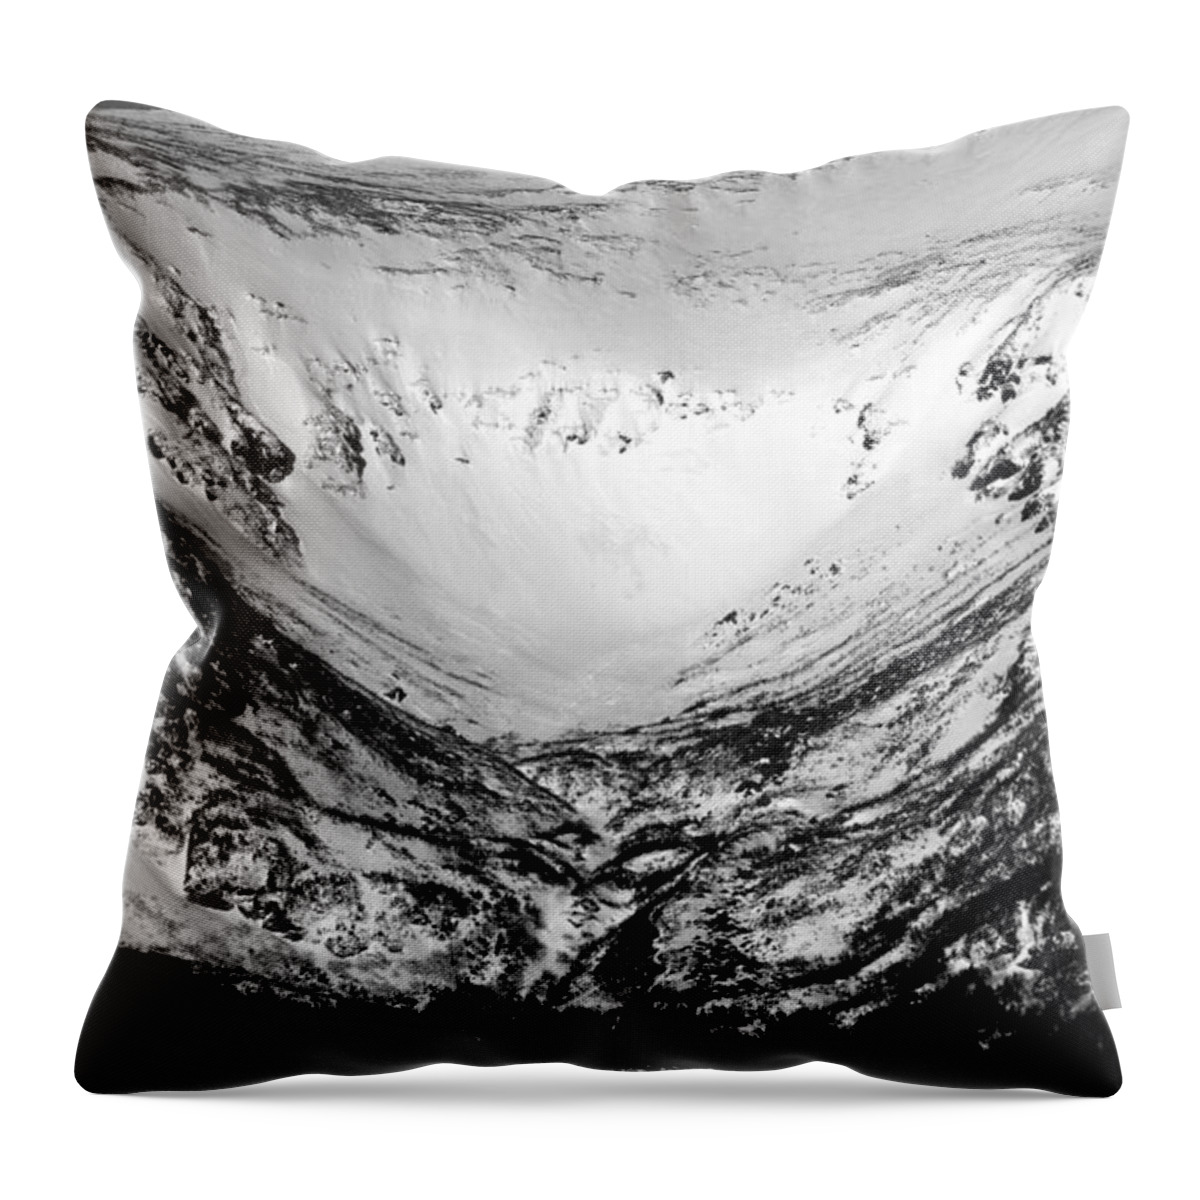 Mount Washington Throw Pillow featuring the photograph Tuckerman Ravine by Brett Pelletier